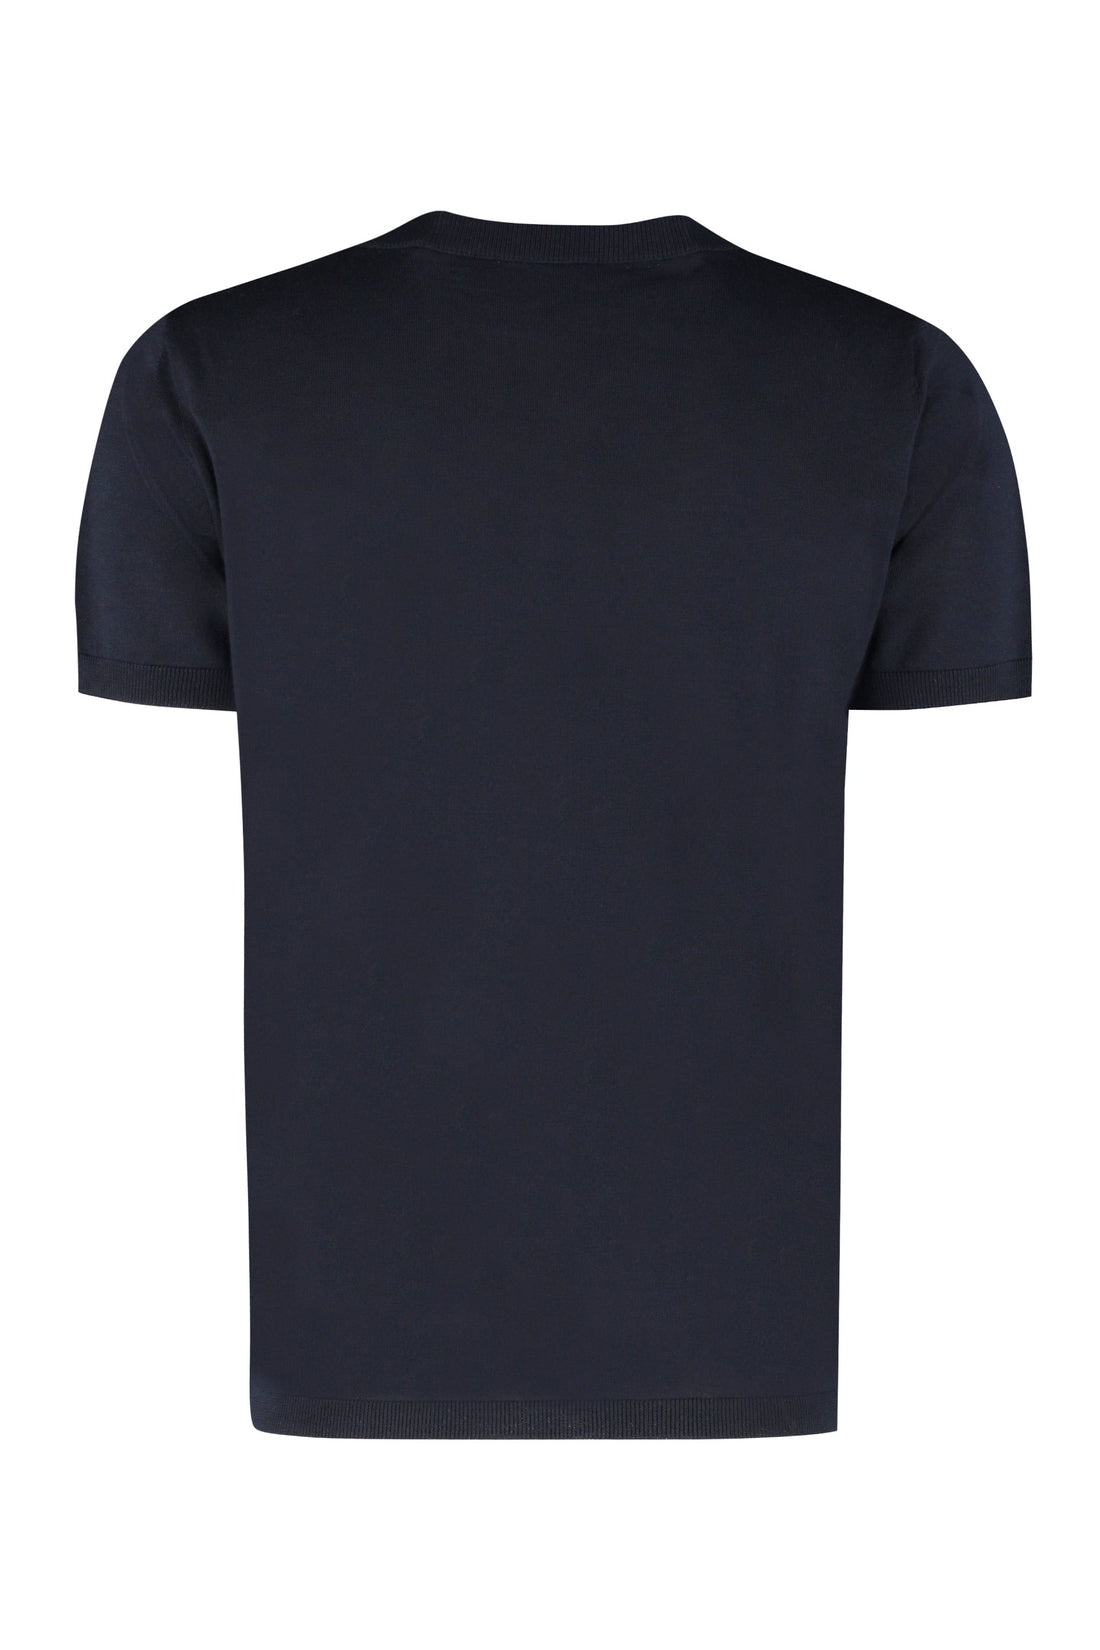 S MAX MARA-OUTLET-SALE-Egidio wool t-shirt-ARCHIVIST